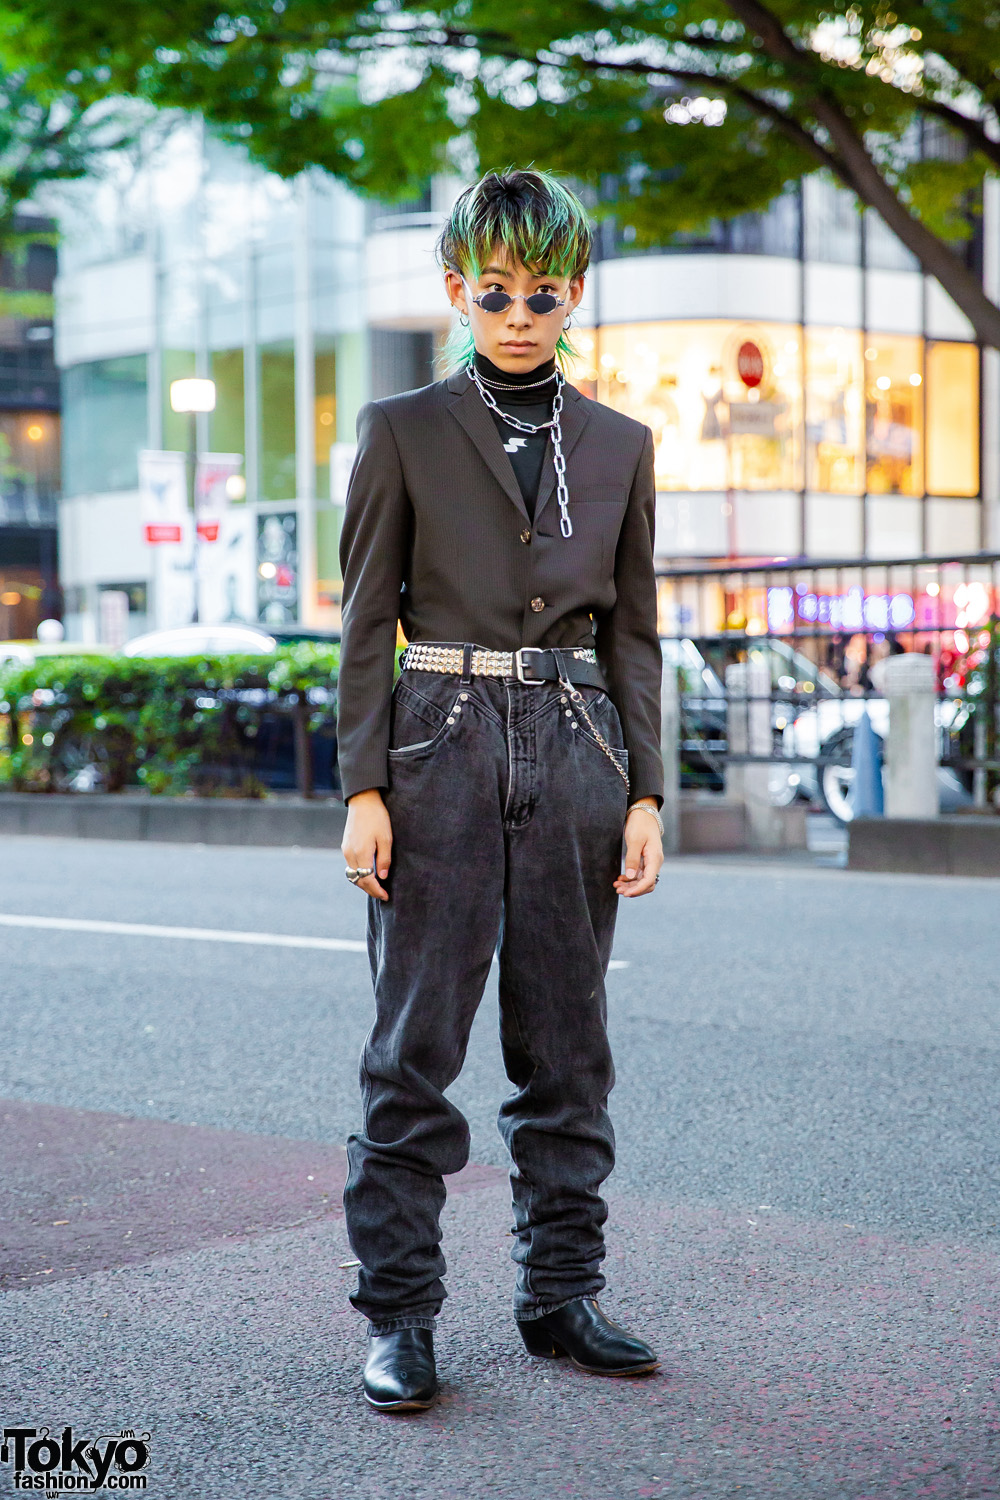 Green-Haired Harajuku Guy in All Black Vintage Streetwear